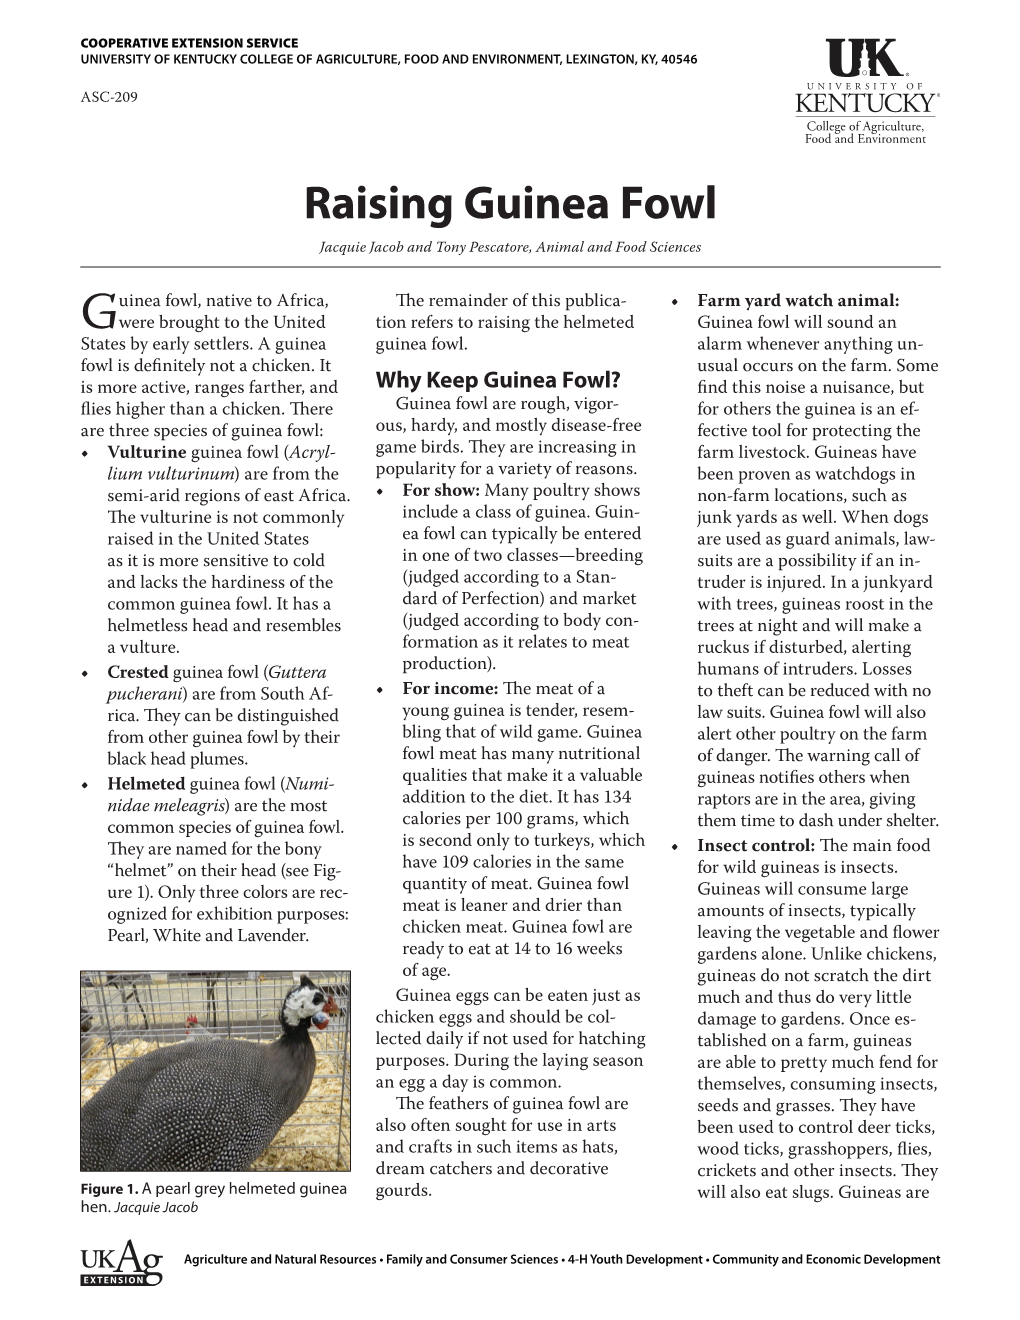 ASC-209: Raising Guinea Fowl